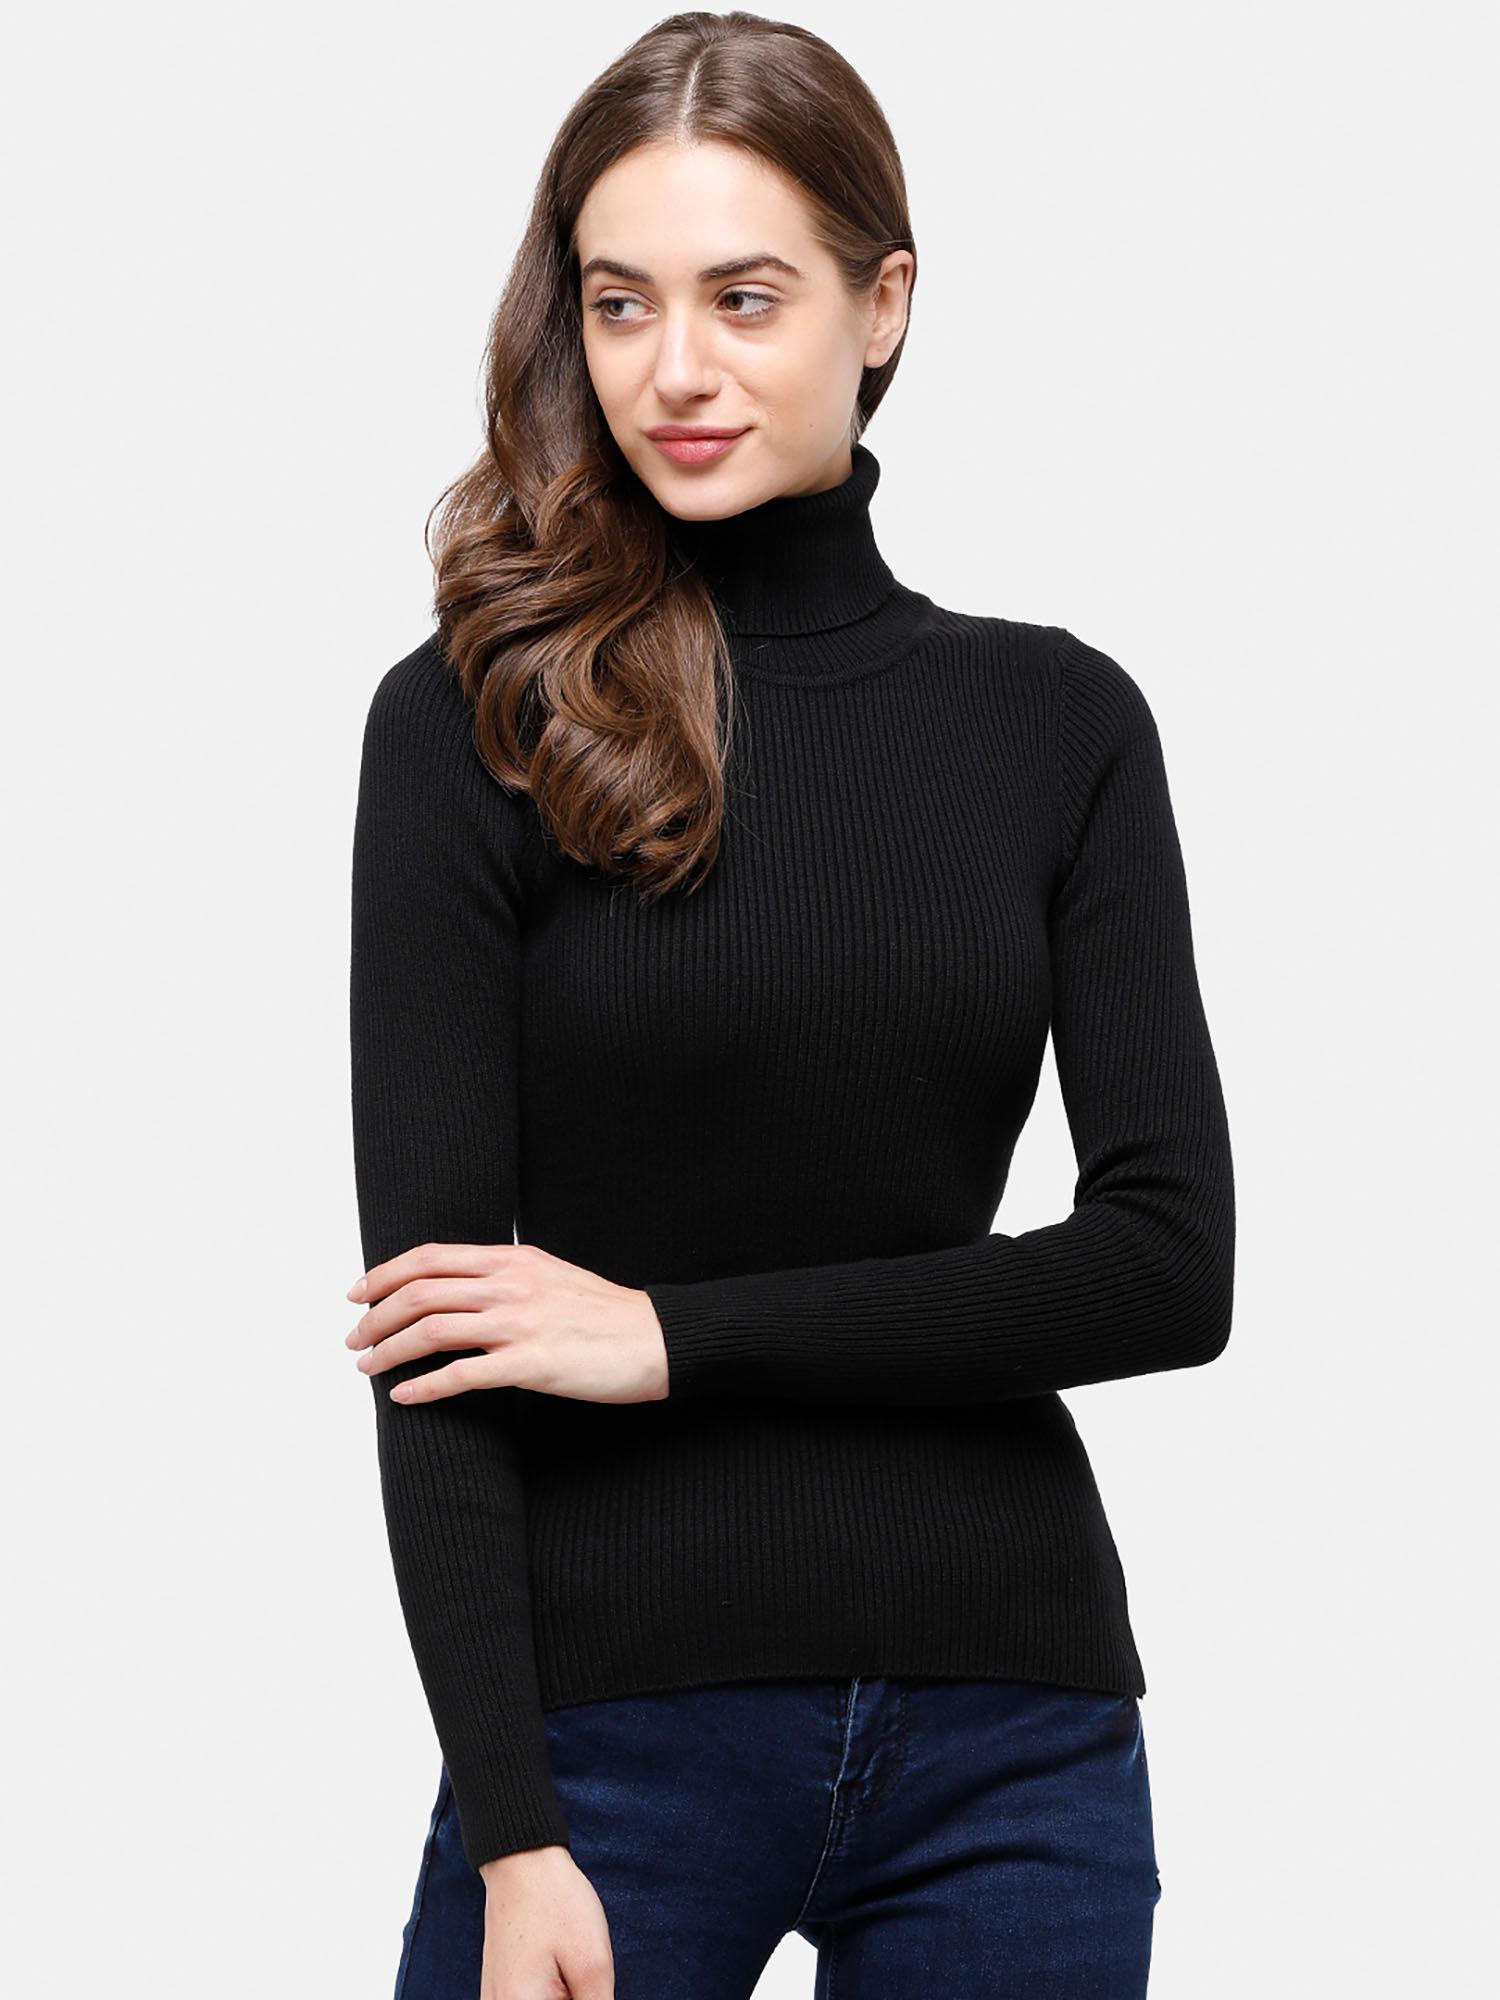 98 degree north's black full sleeves sweater